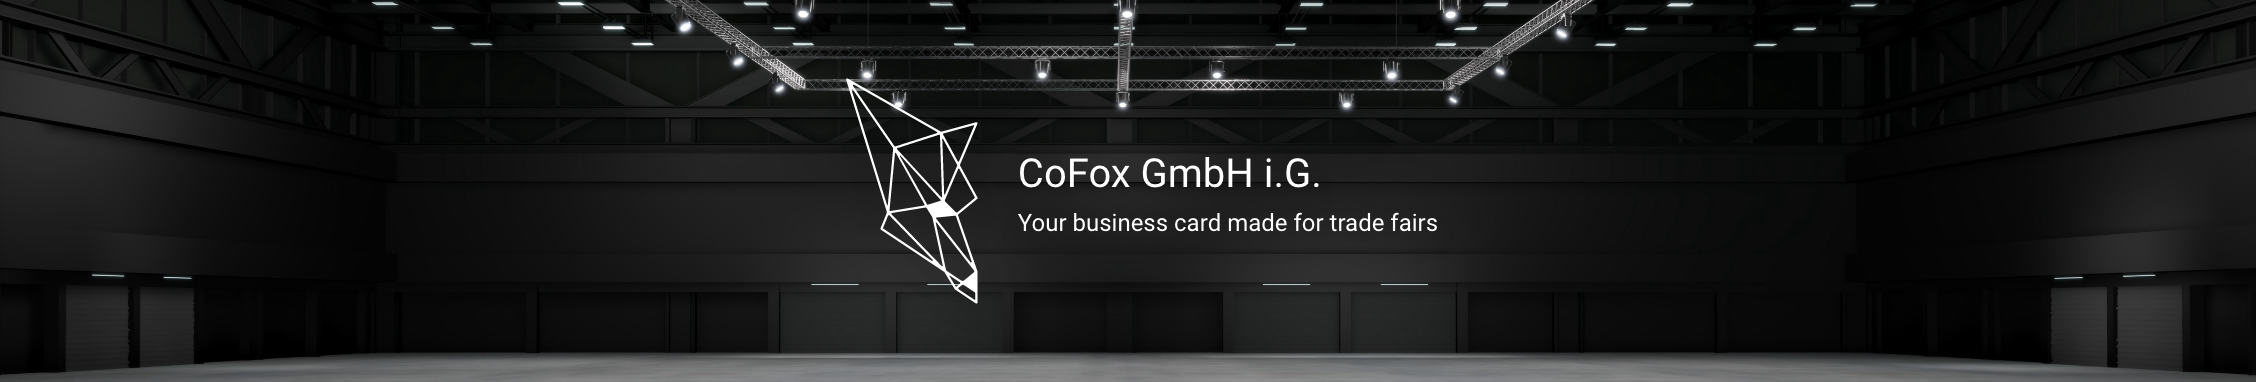 CoFox / startup from München / Background